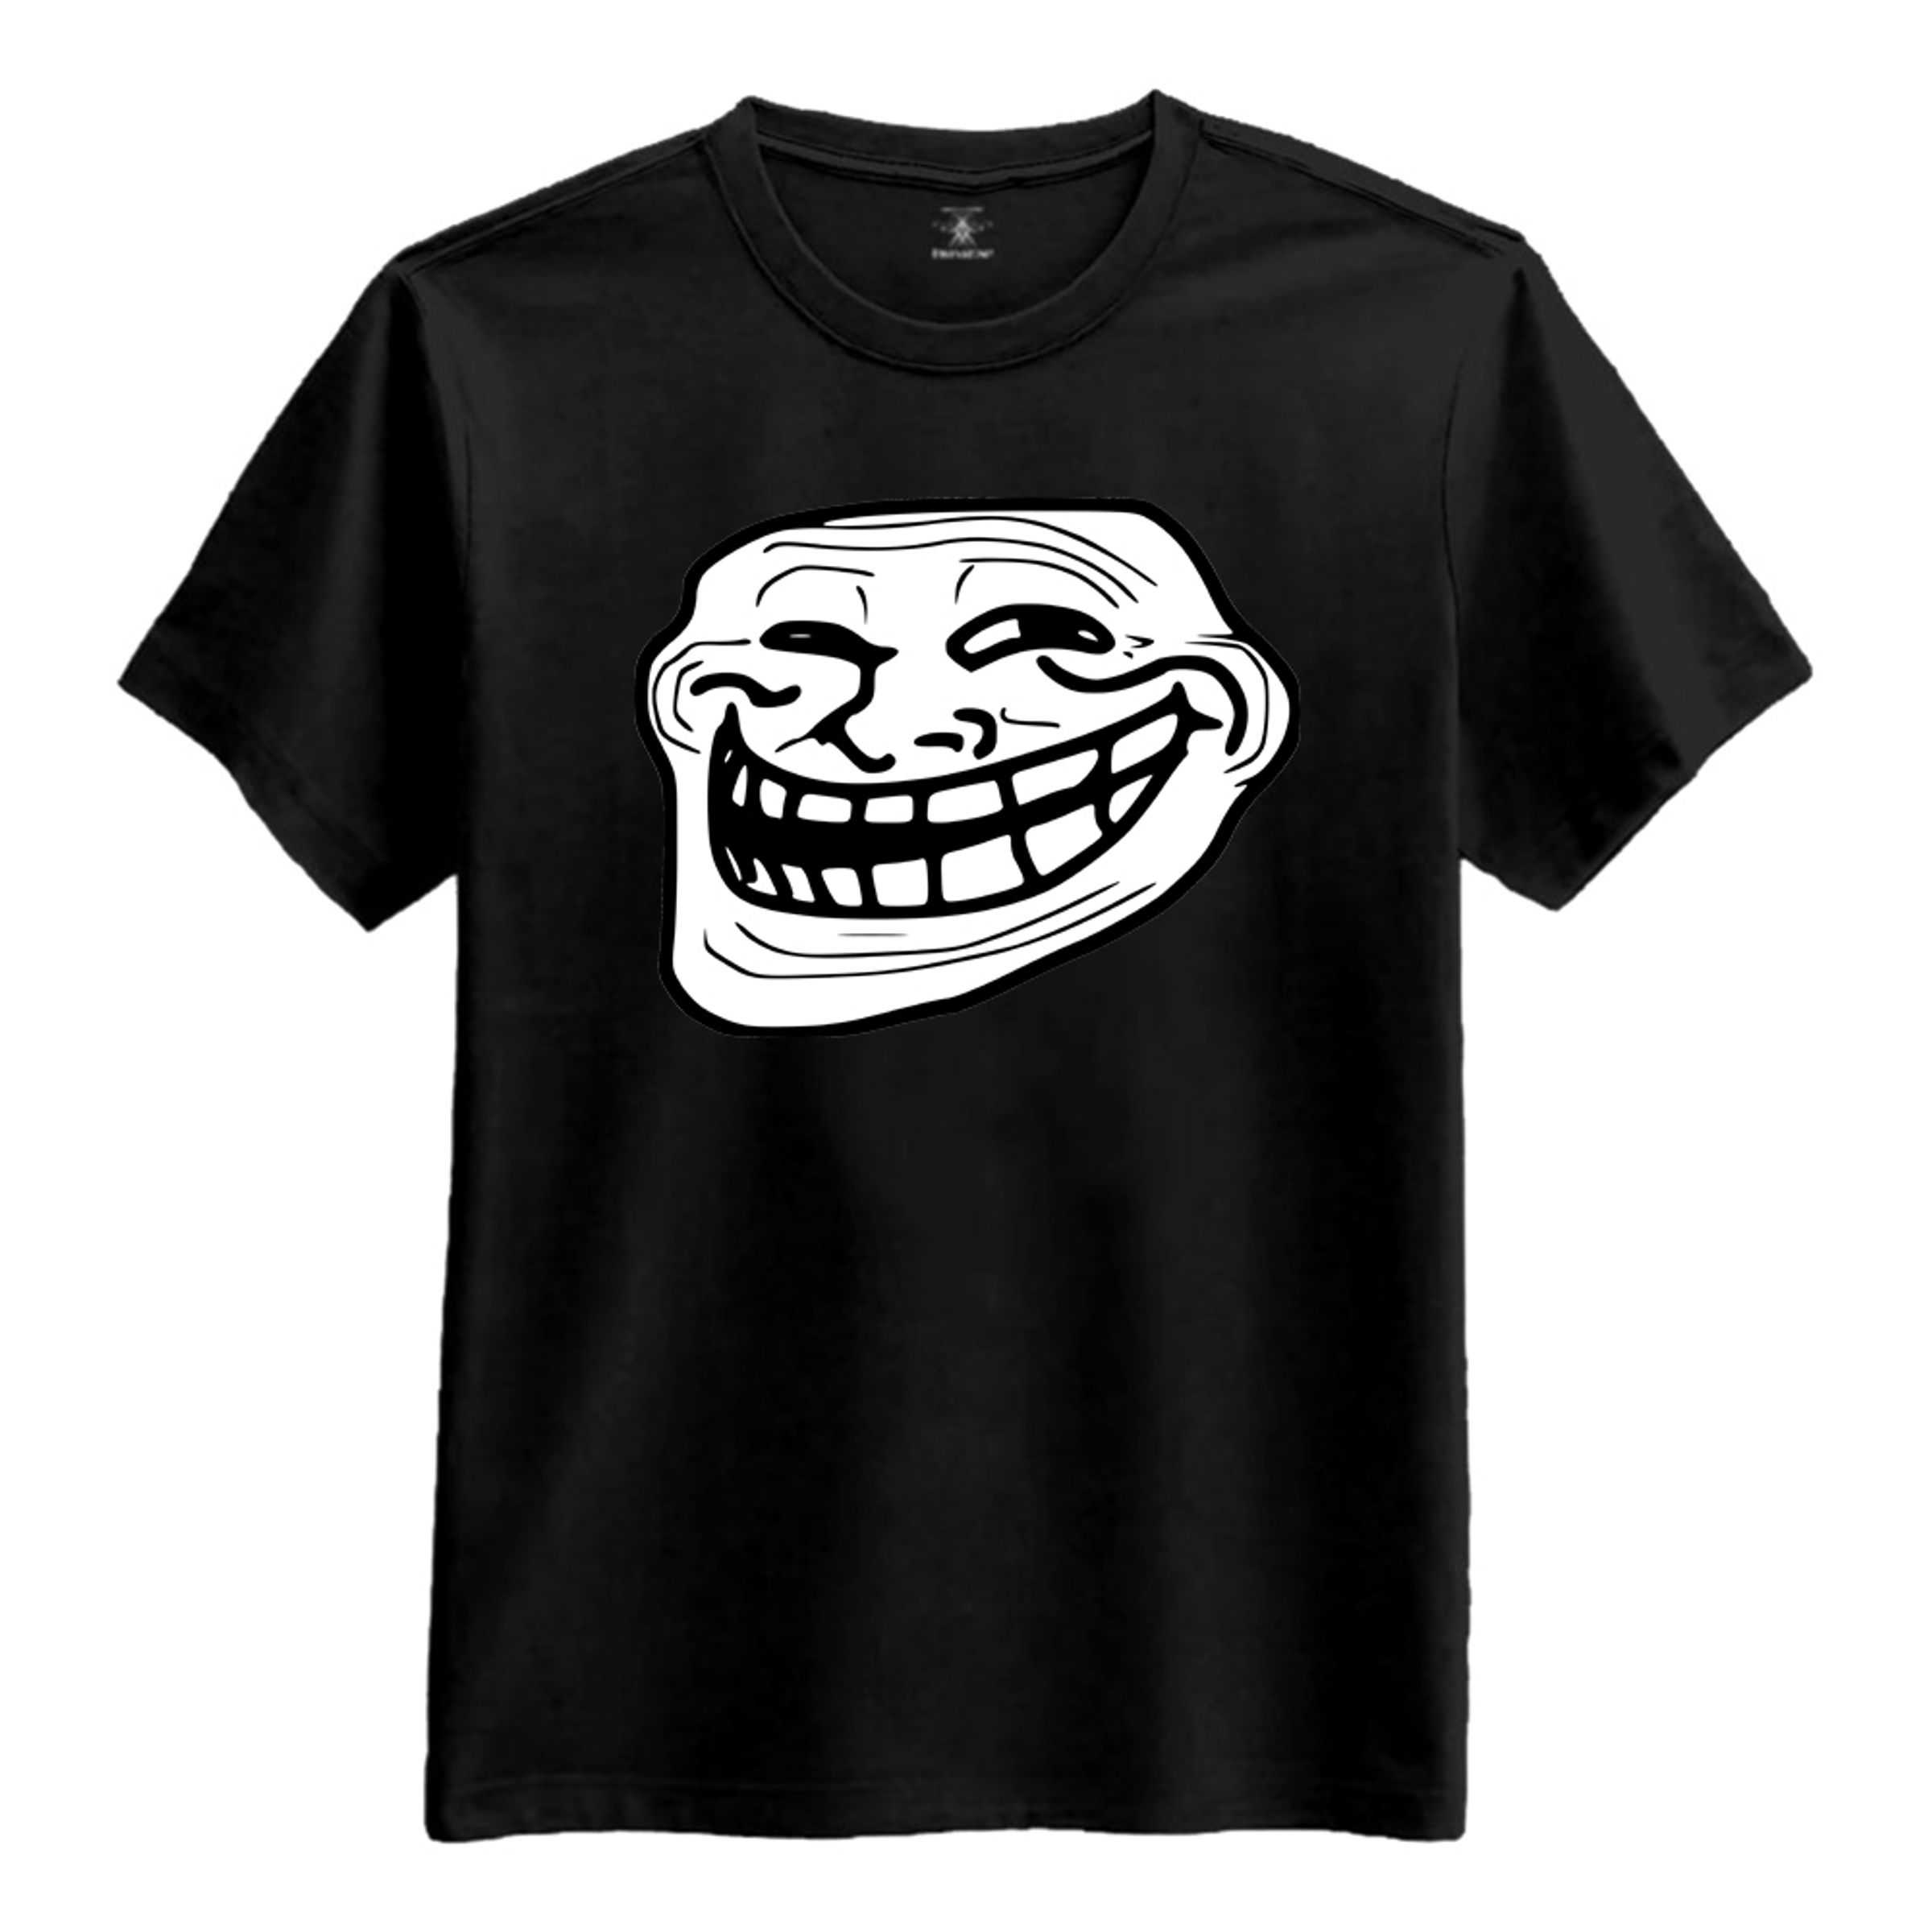 Trollface T-shirt - Large